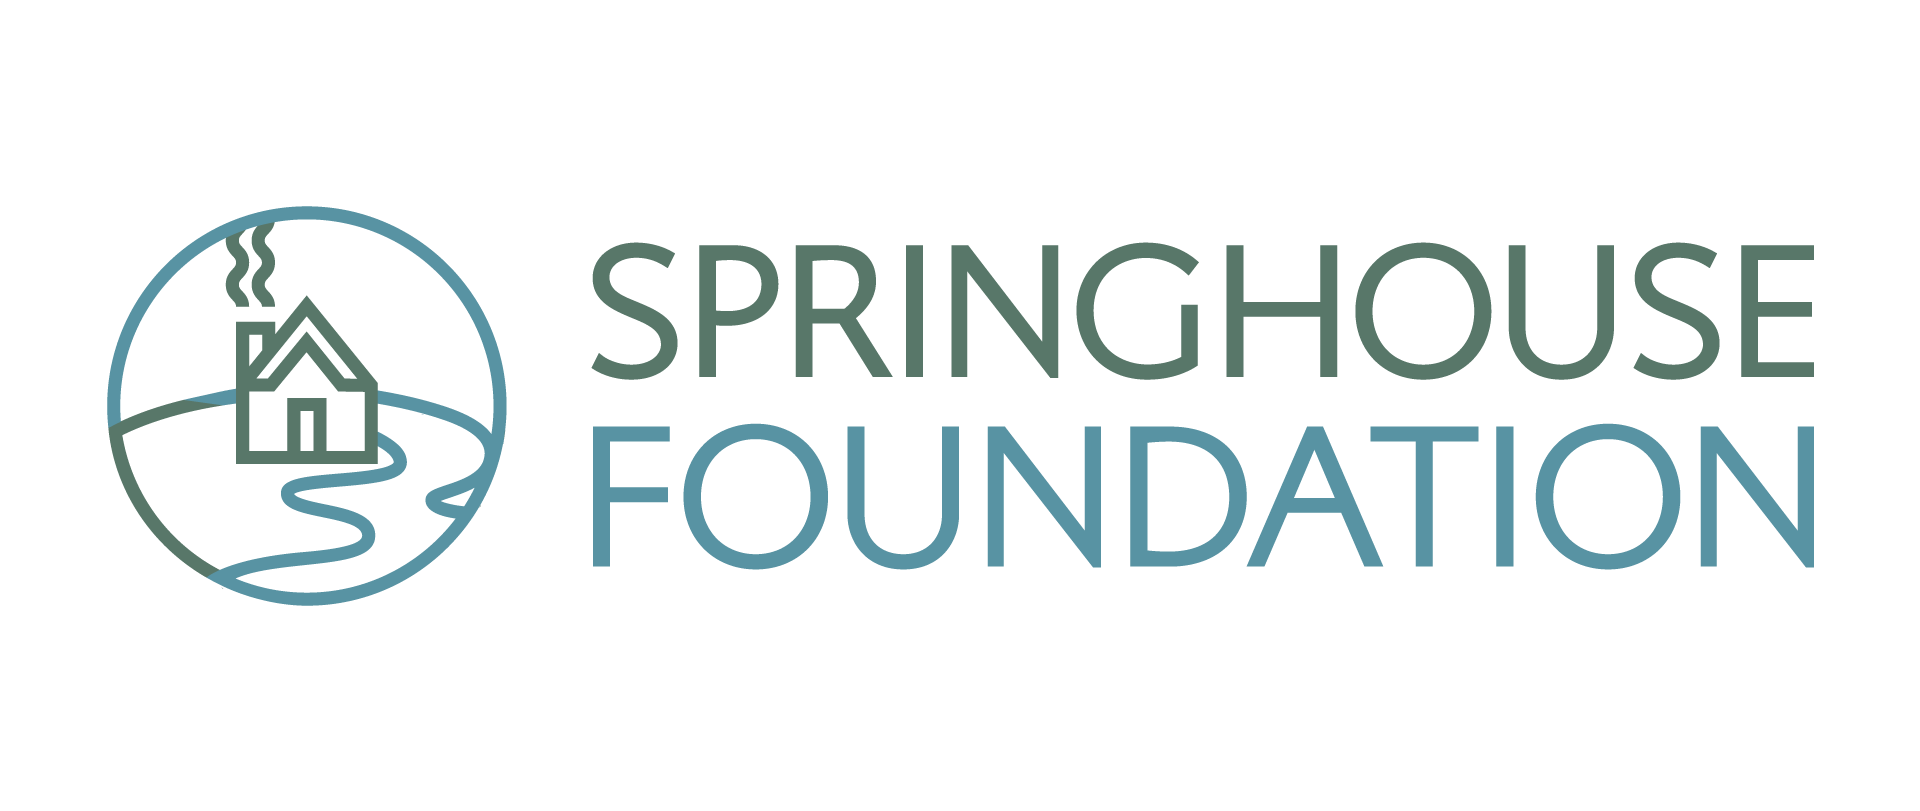 Springhouse Foundation Logo